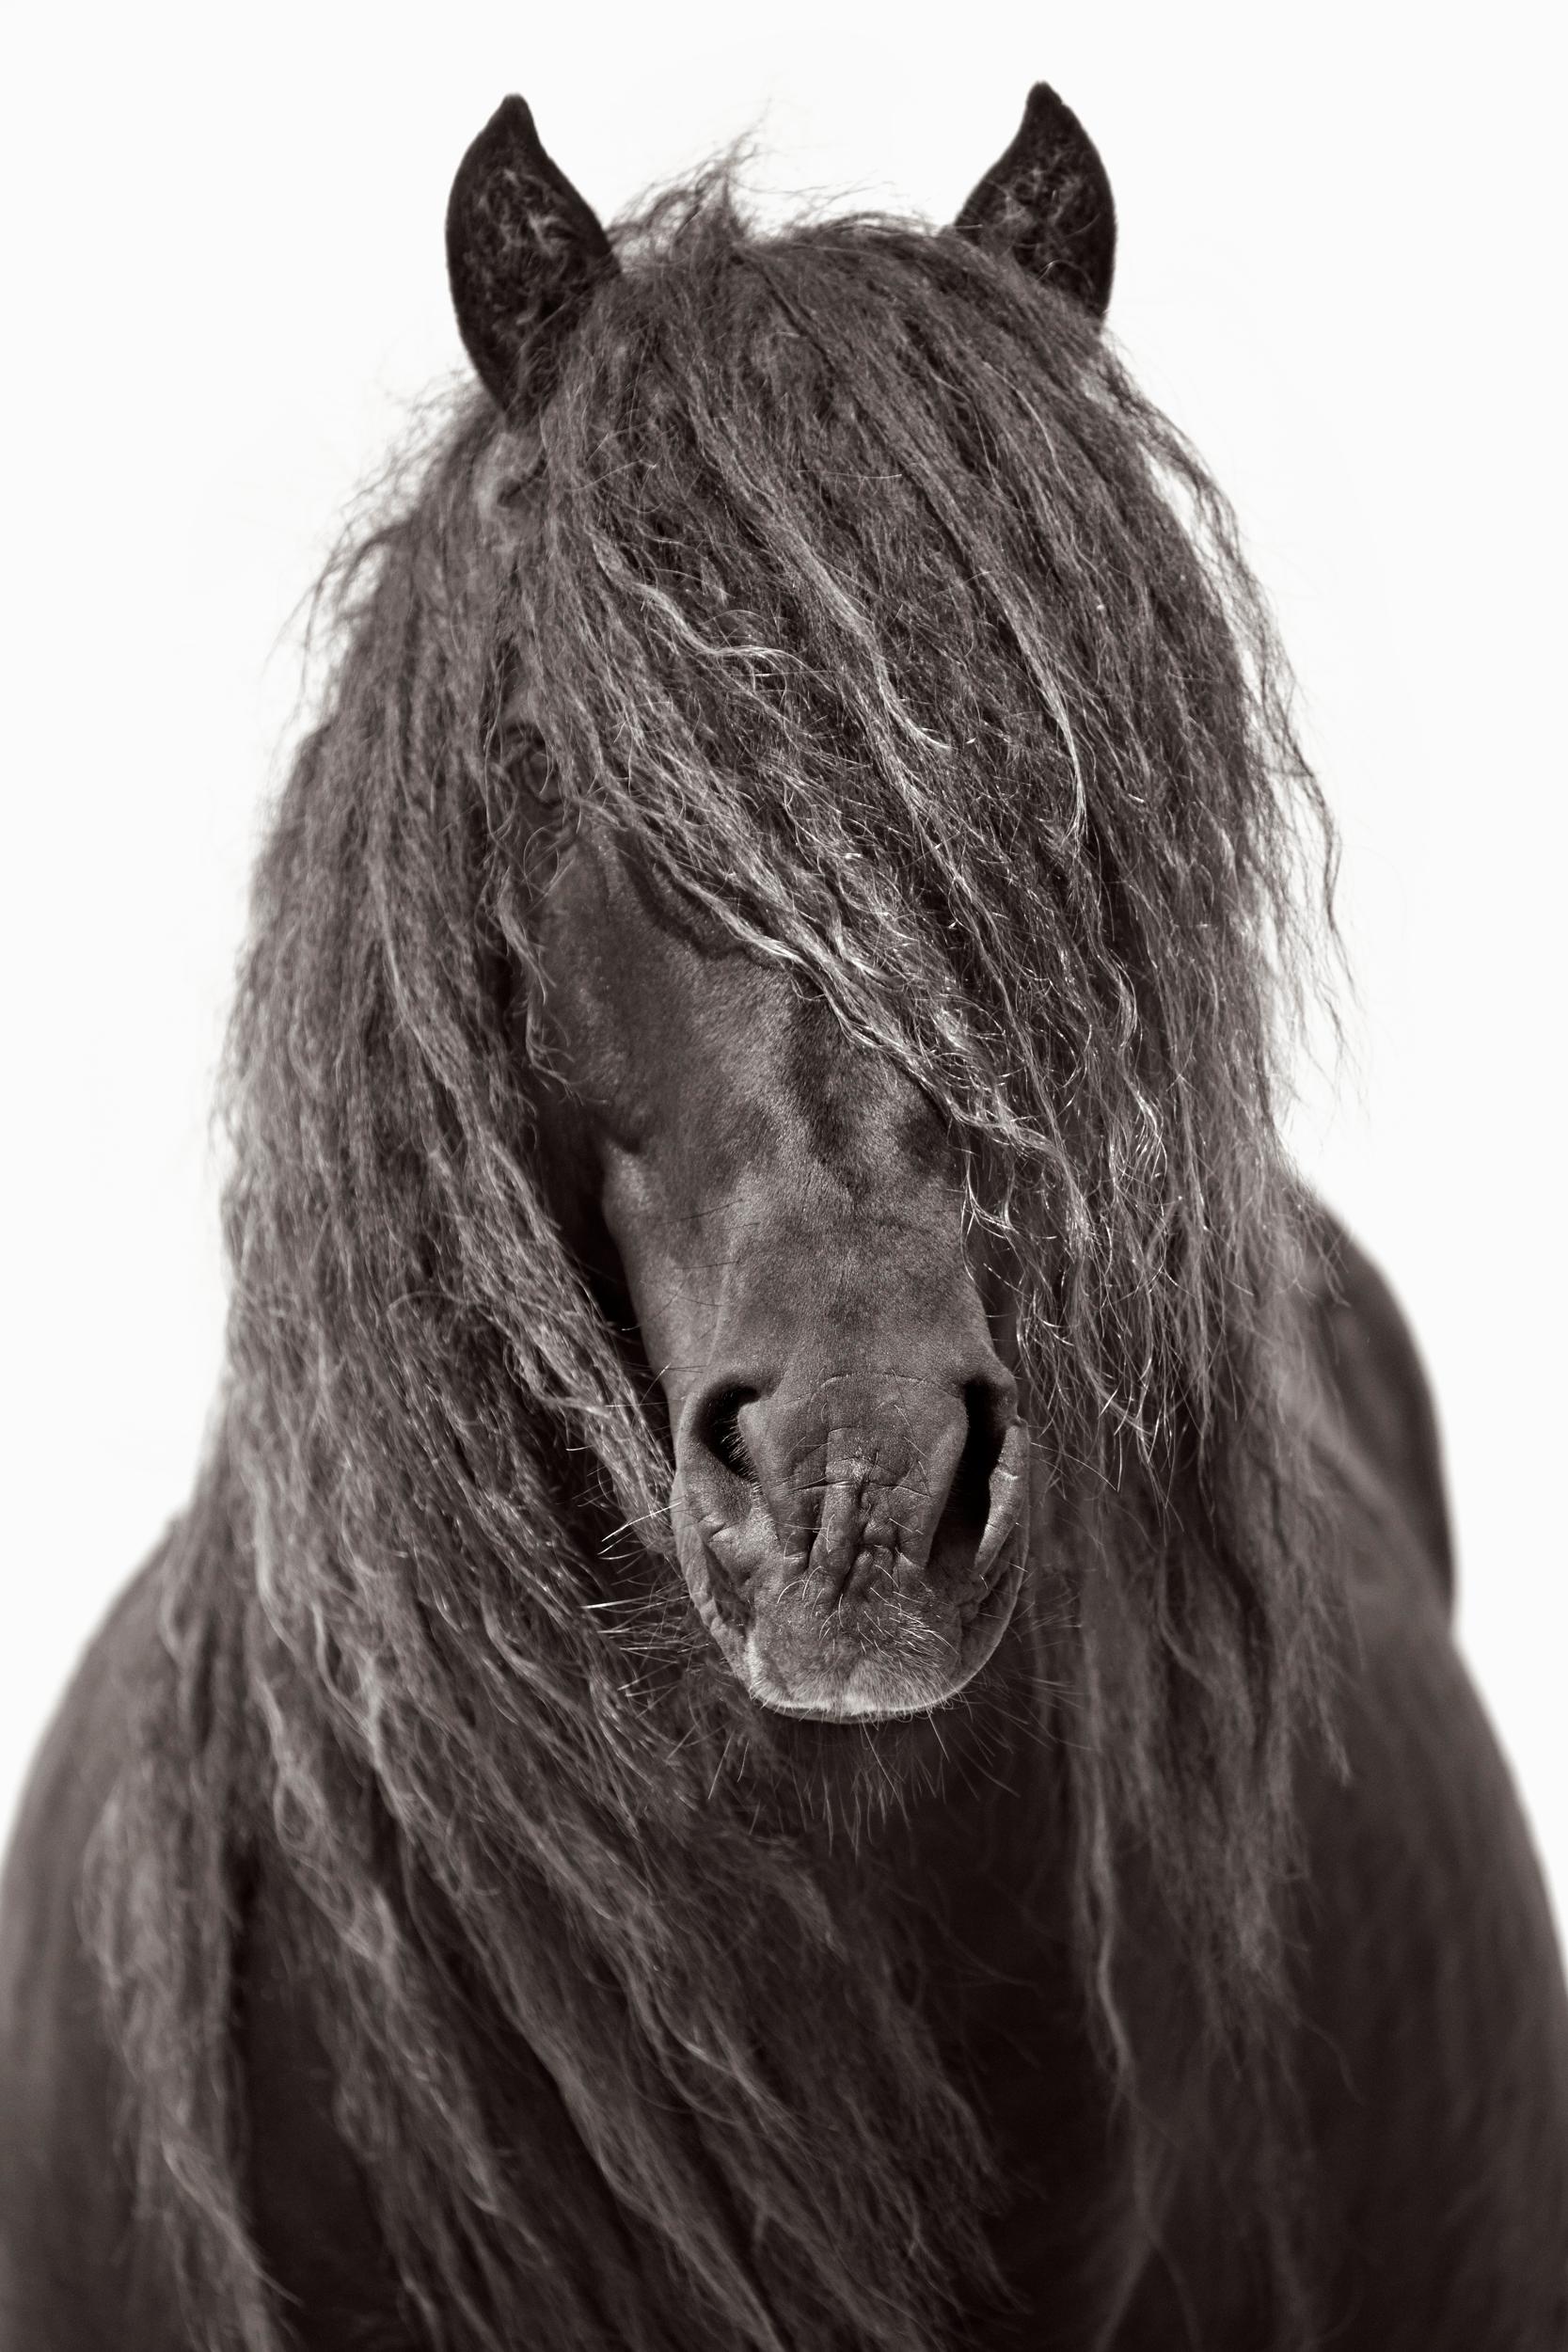 Drew Doggett Portrait Photograph - Intimate Portrait of a Sable Island Horse's Beautiful Mane, Fashion, Iconic